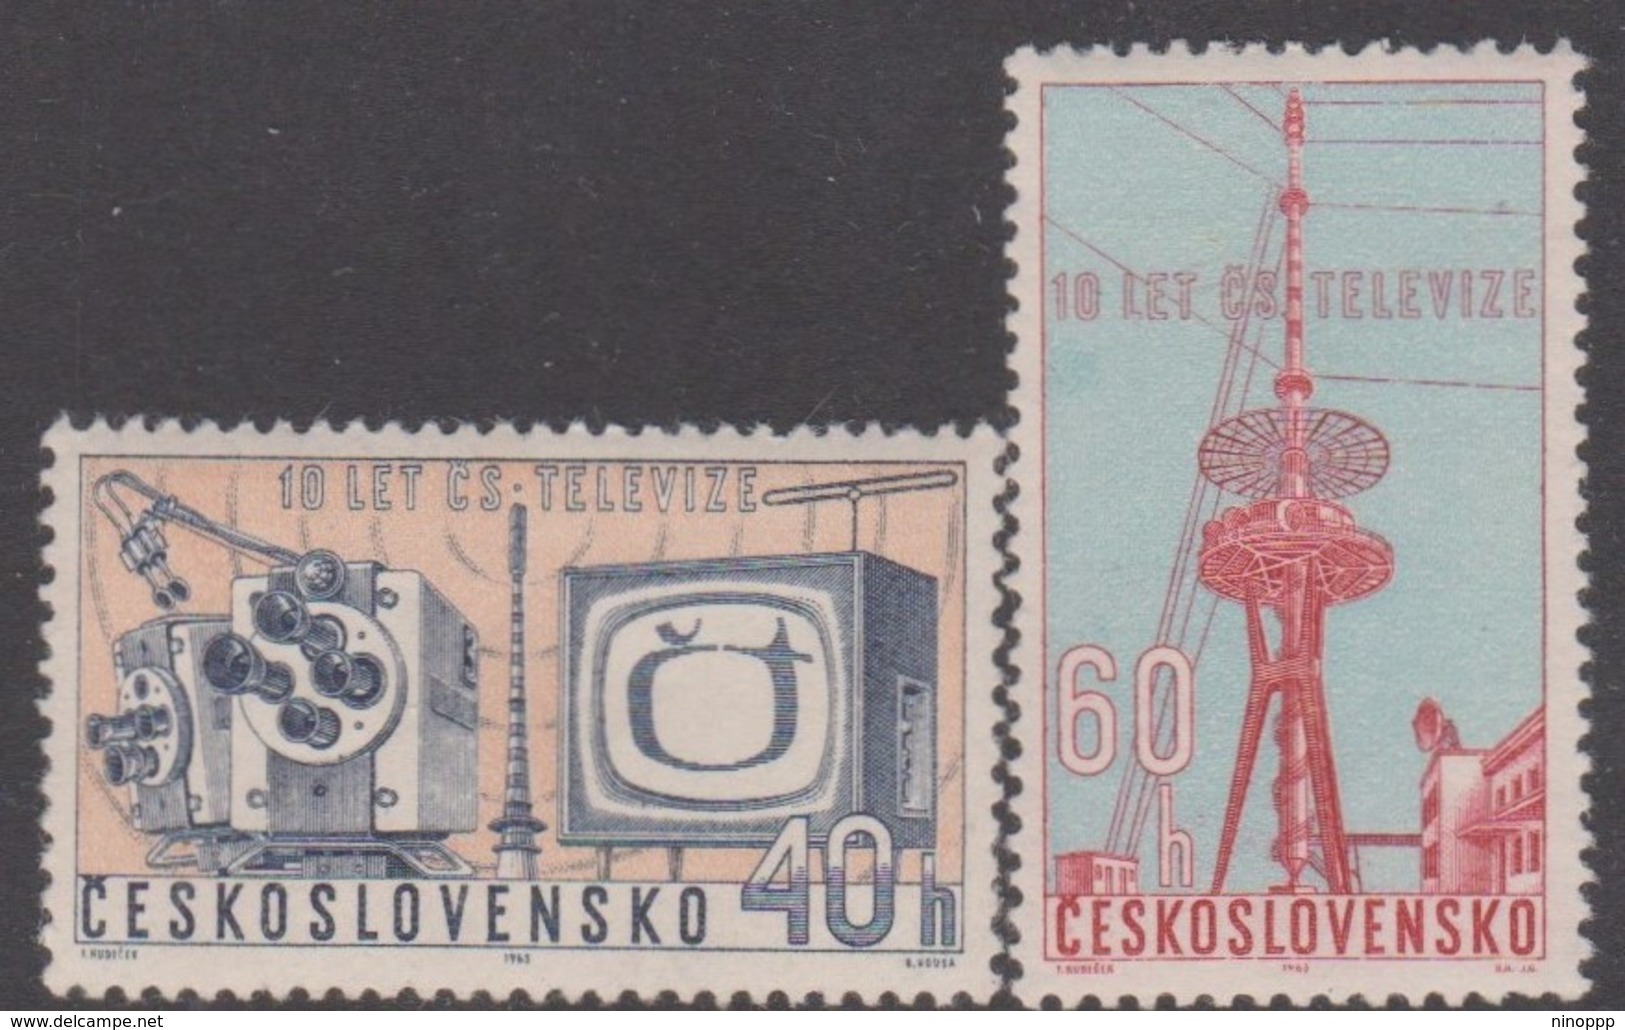 Czechoslovakia Scott 1167-1168 1963 Television, Mint Never Hinged - Unused Stamps